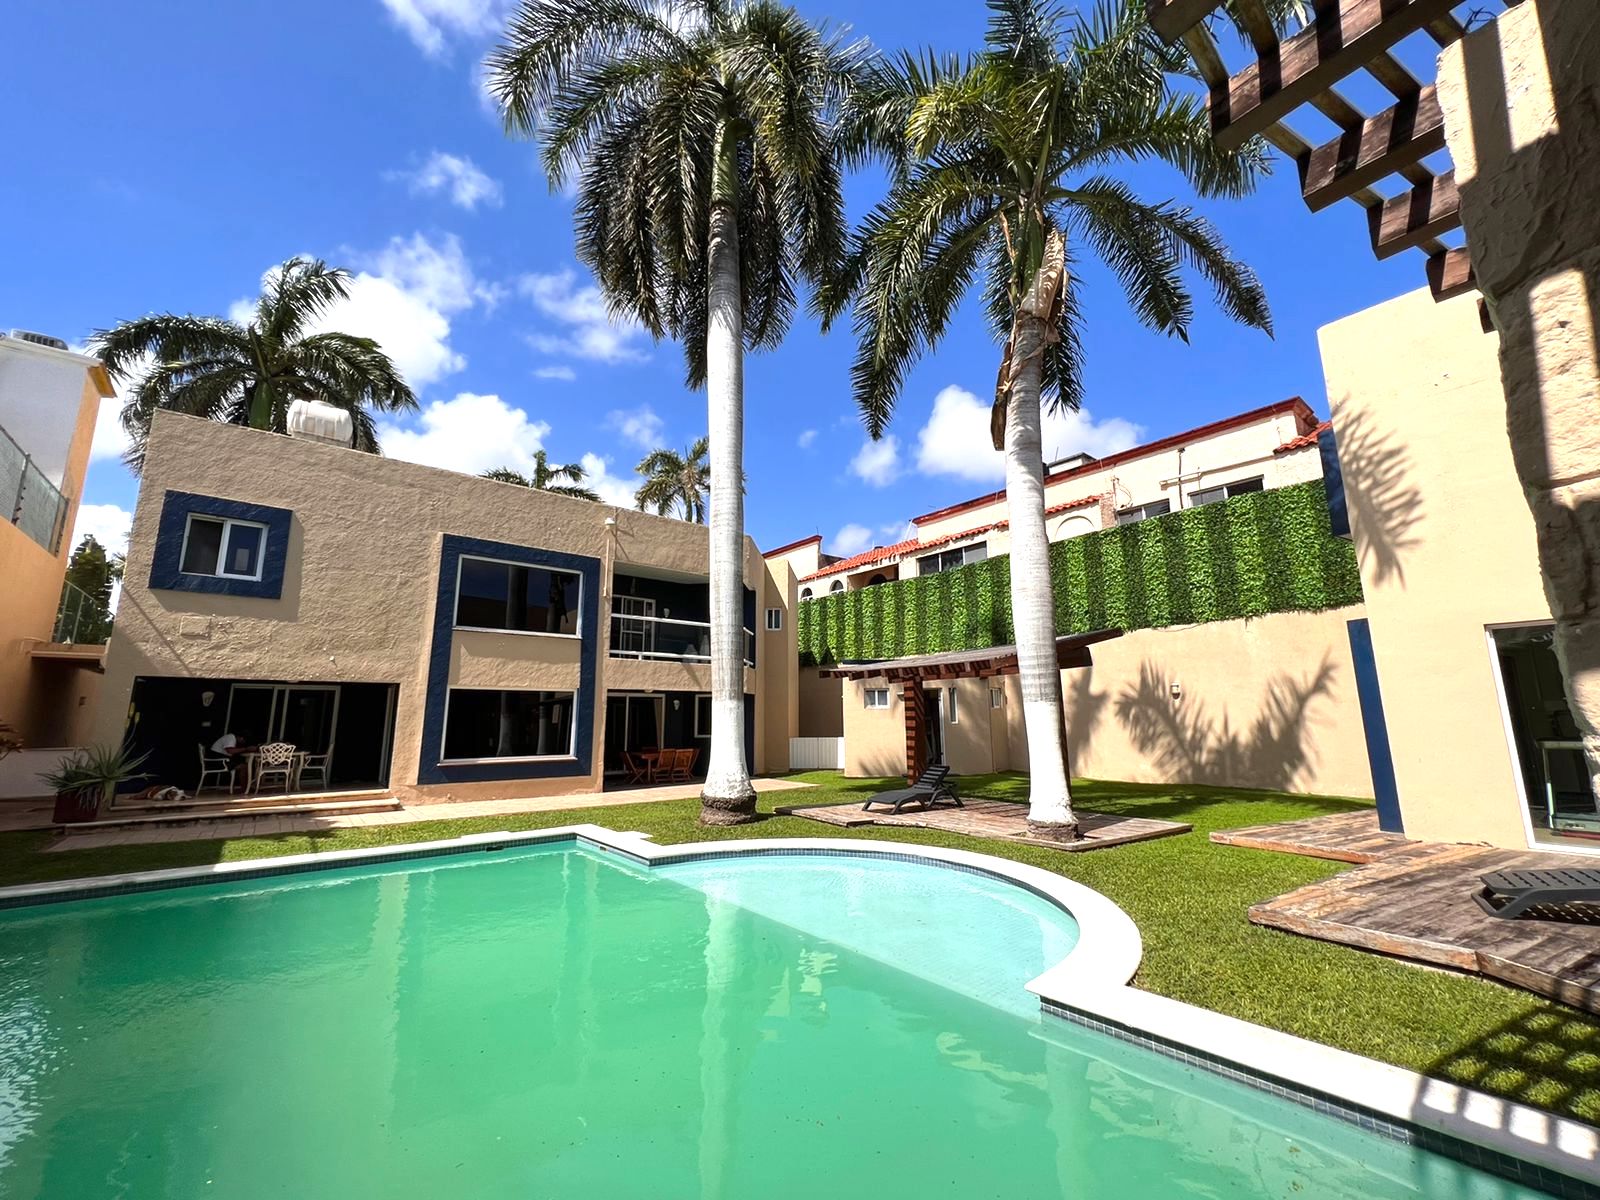 Casa Venta Campestre Cancun alberca 800m2 de terreno